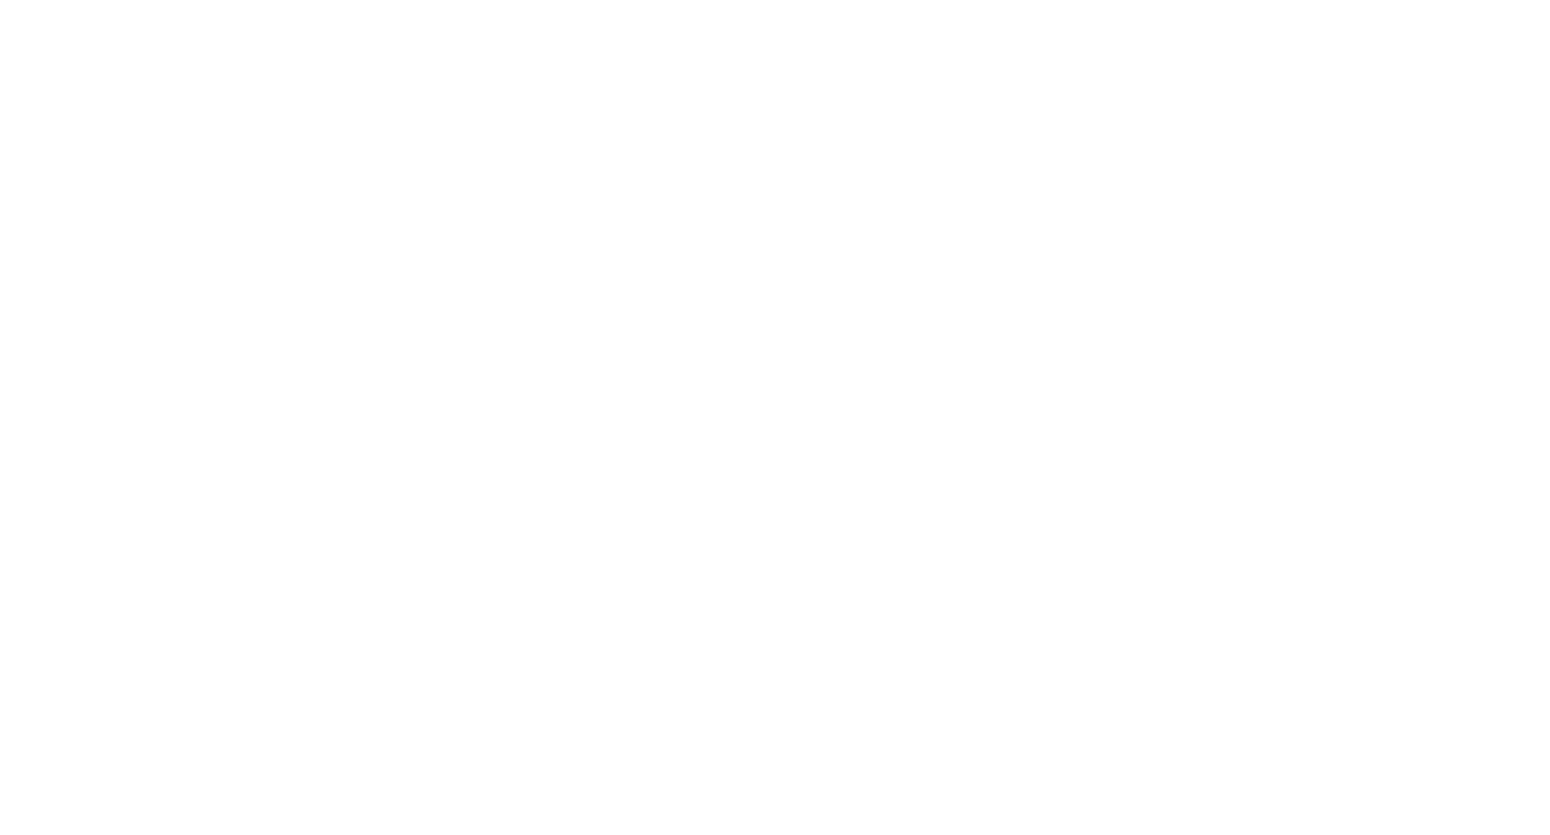 Vantage Towers logo large for dark backgrounds (transparent PNG)